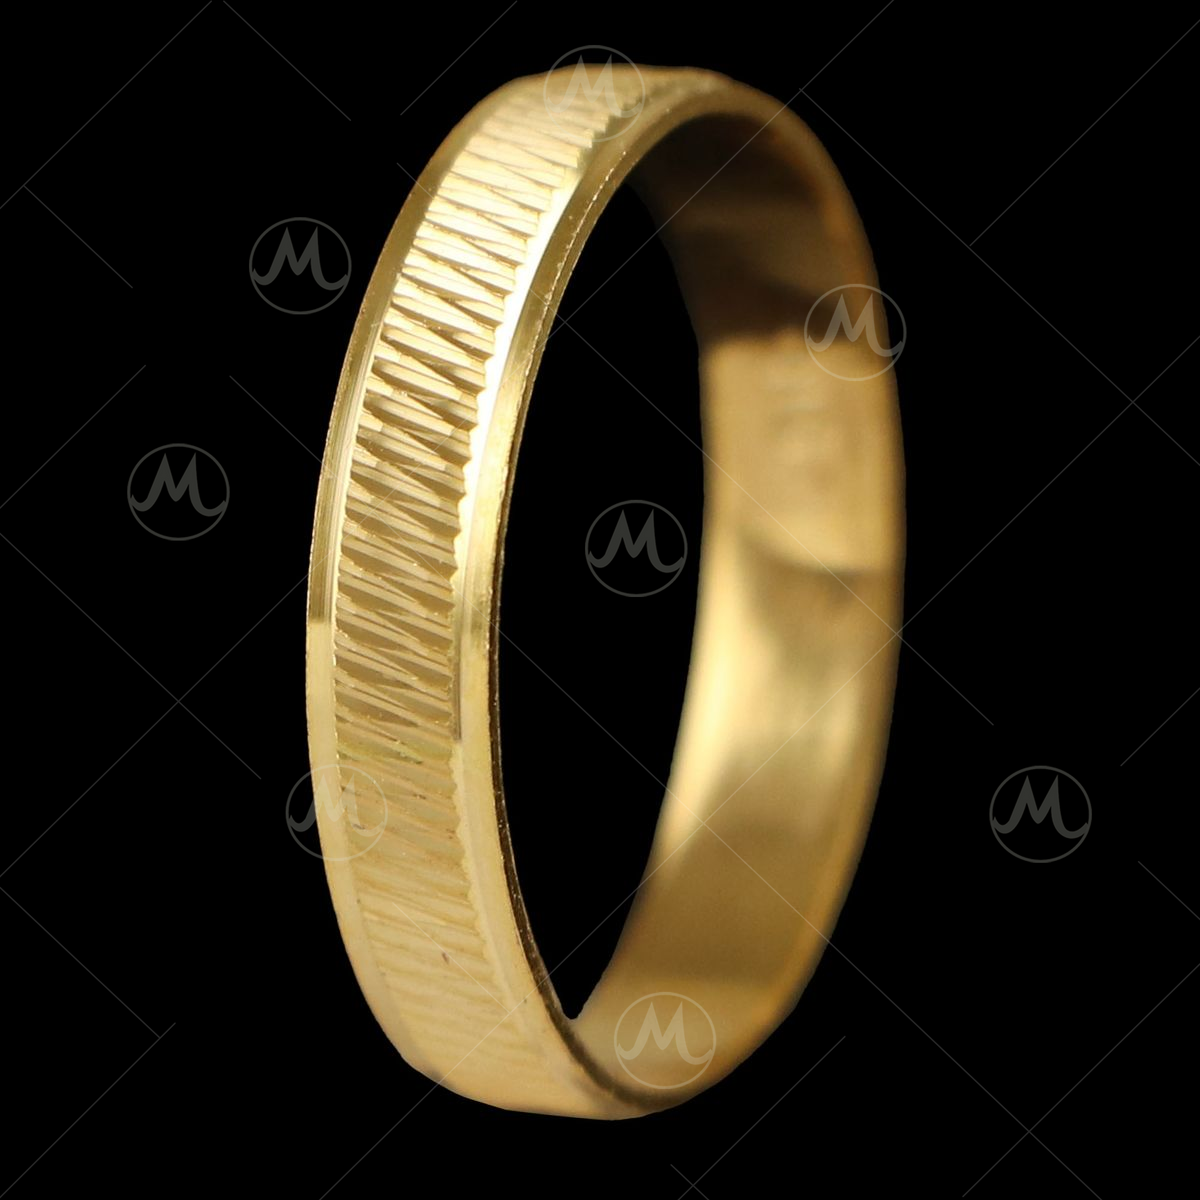 Gold Ring PNG Images & PSDs for Download | PixelSquid - S118124029